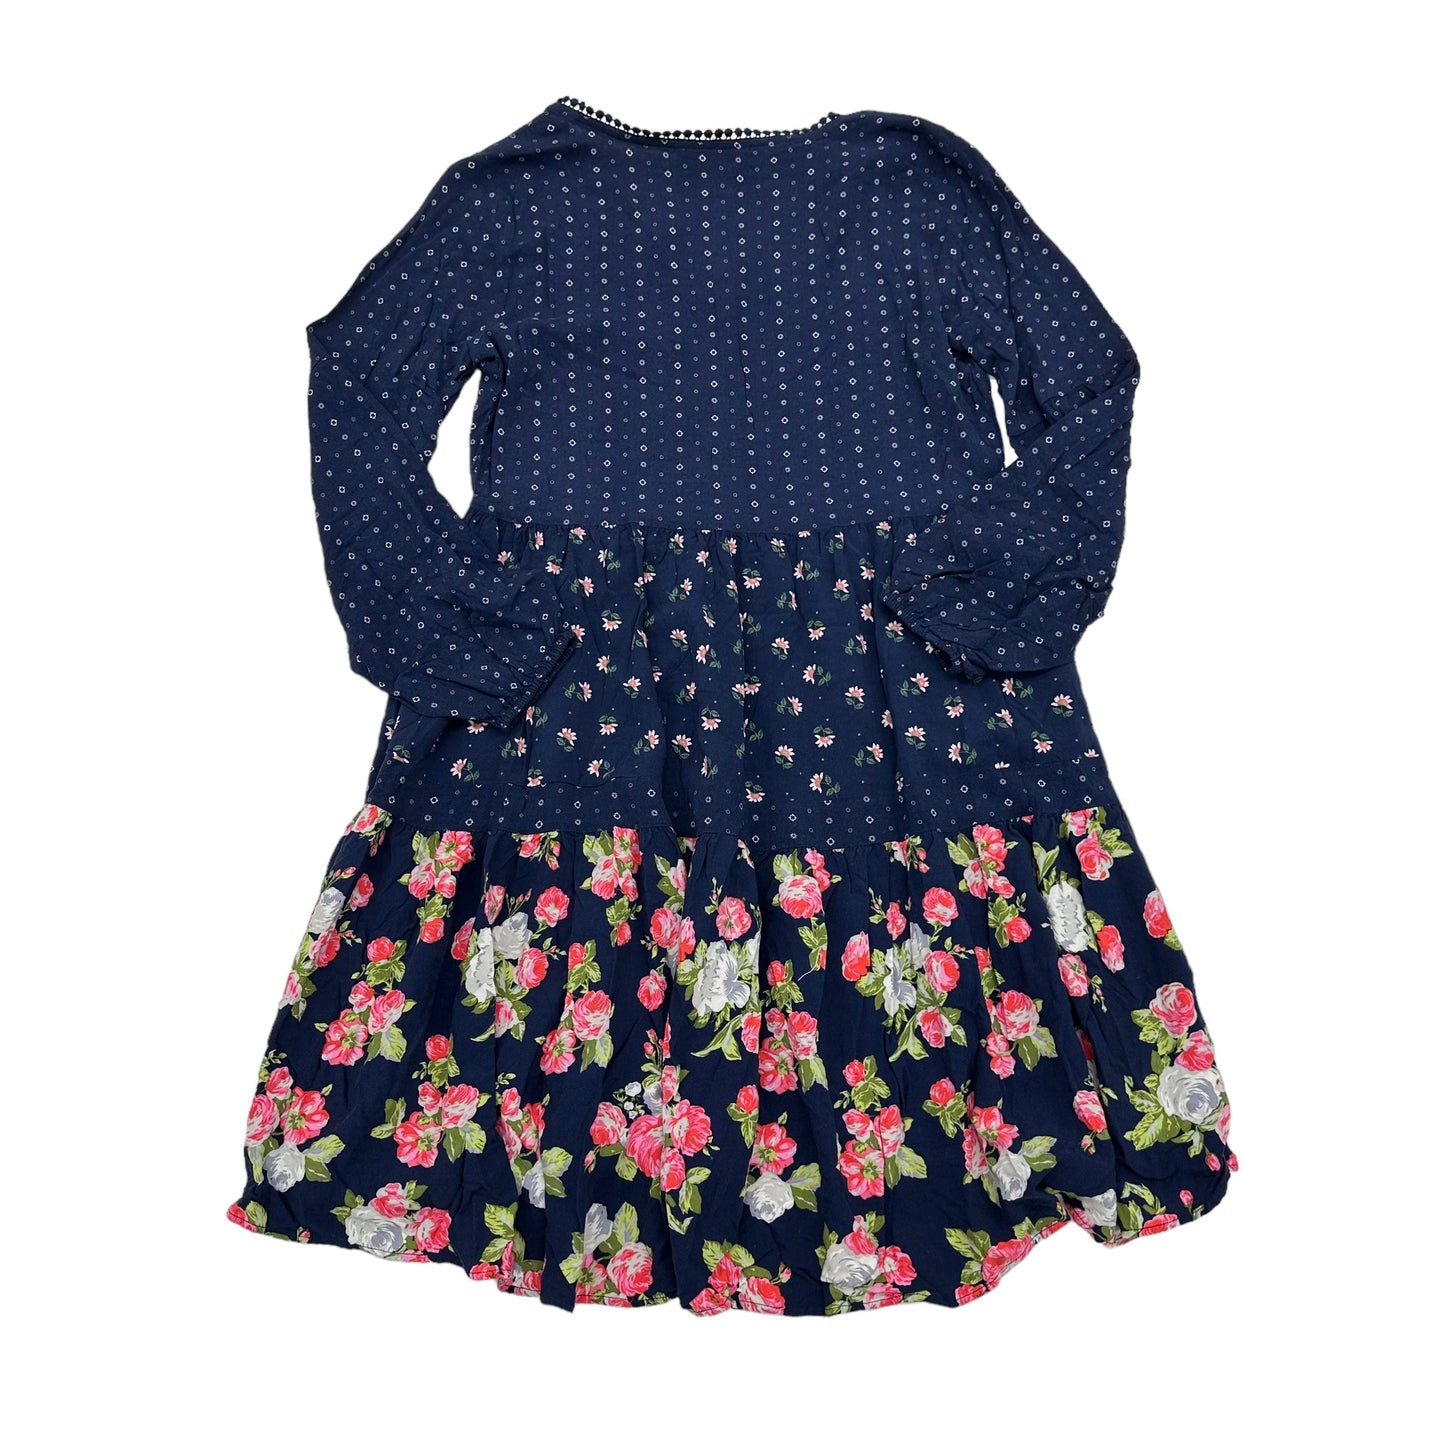 Dress Casual Short By Matilda Jane  Size: M